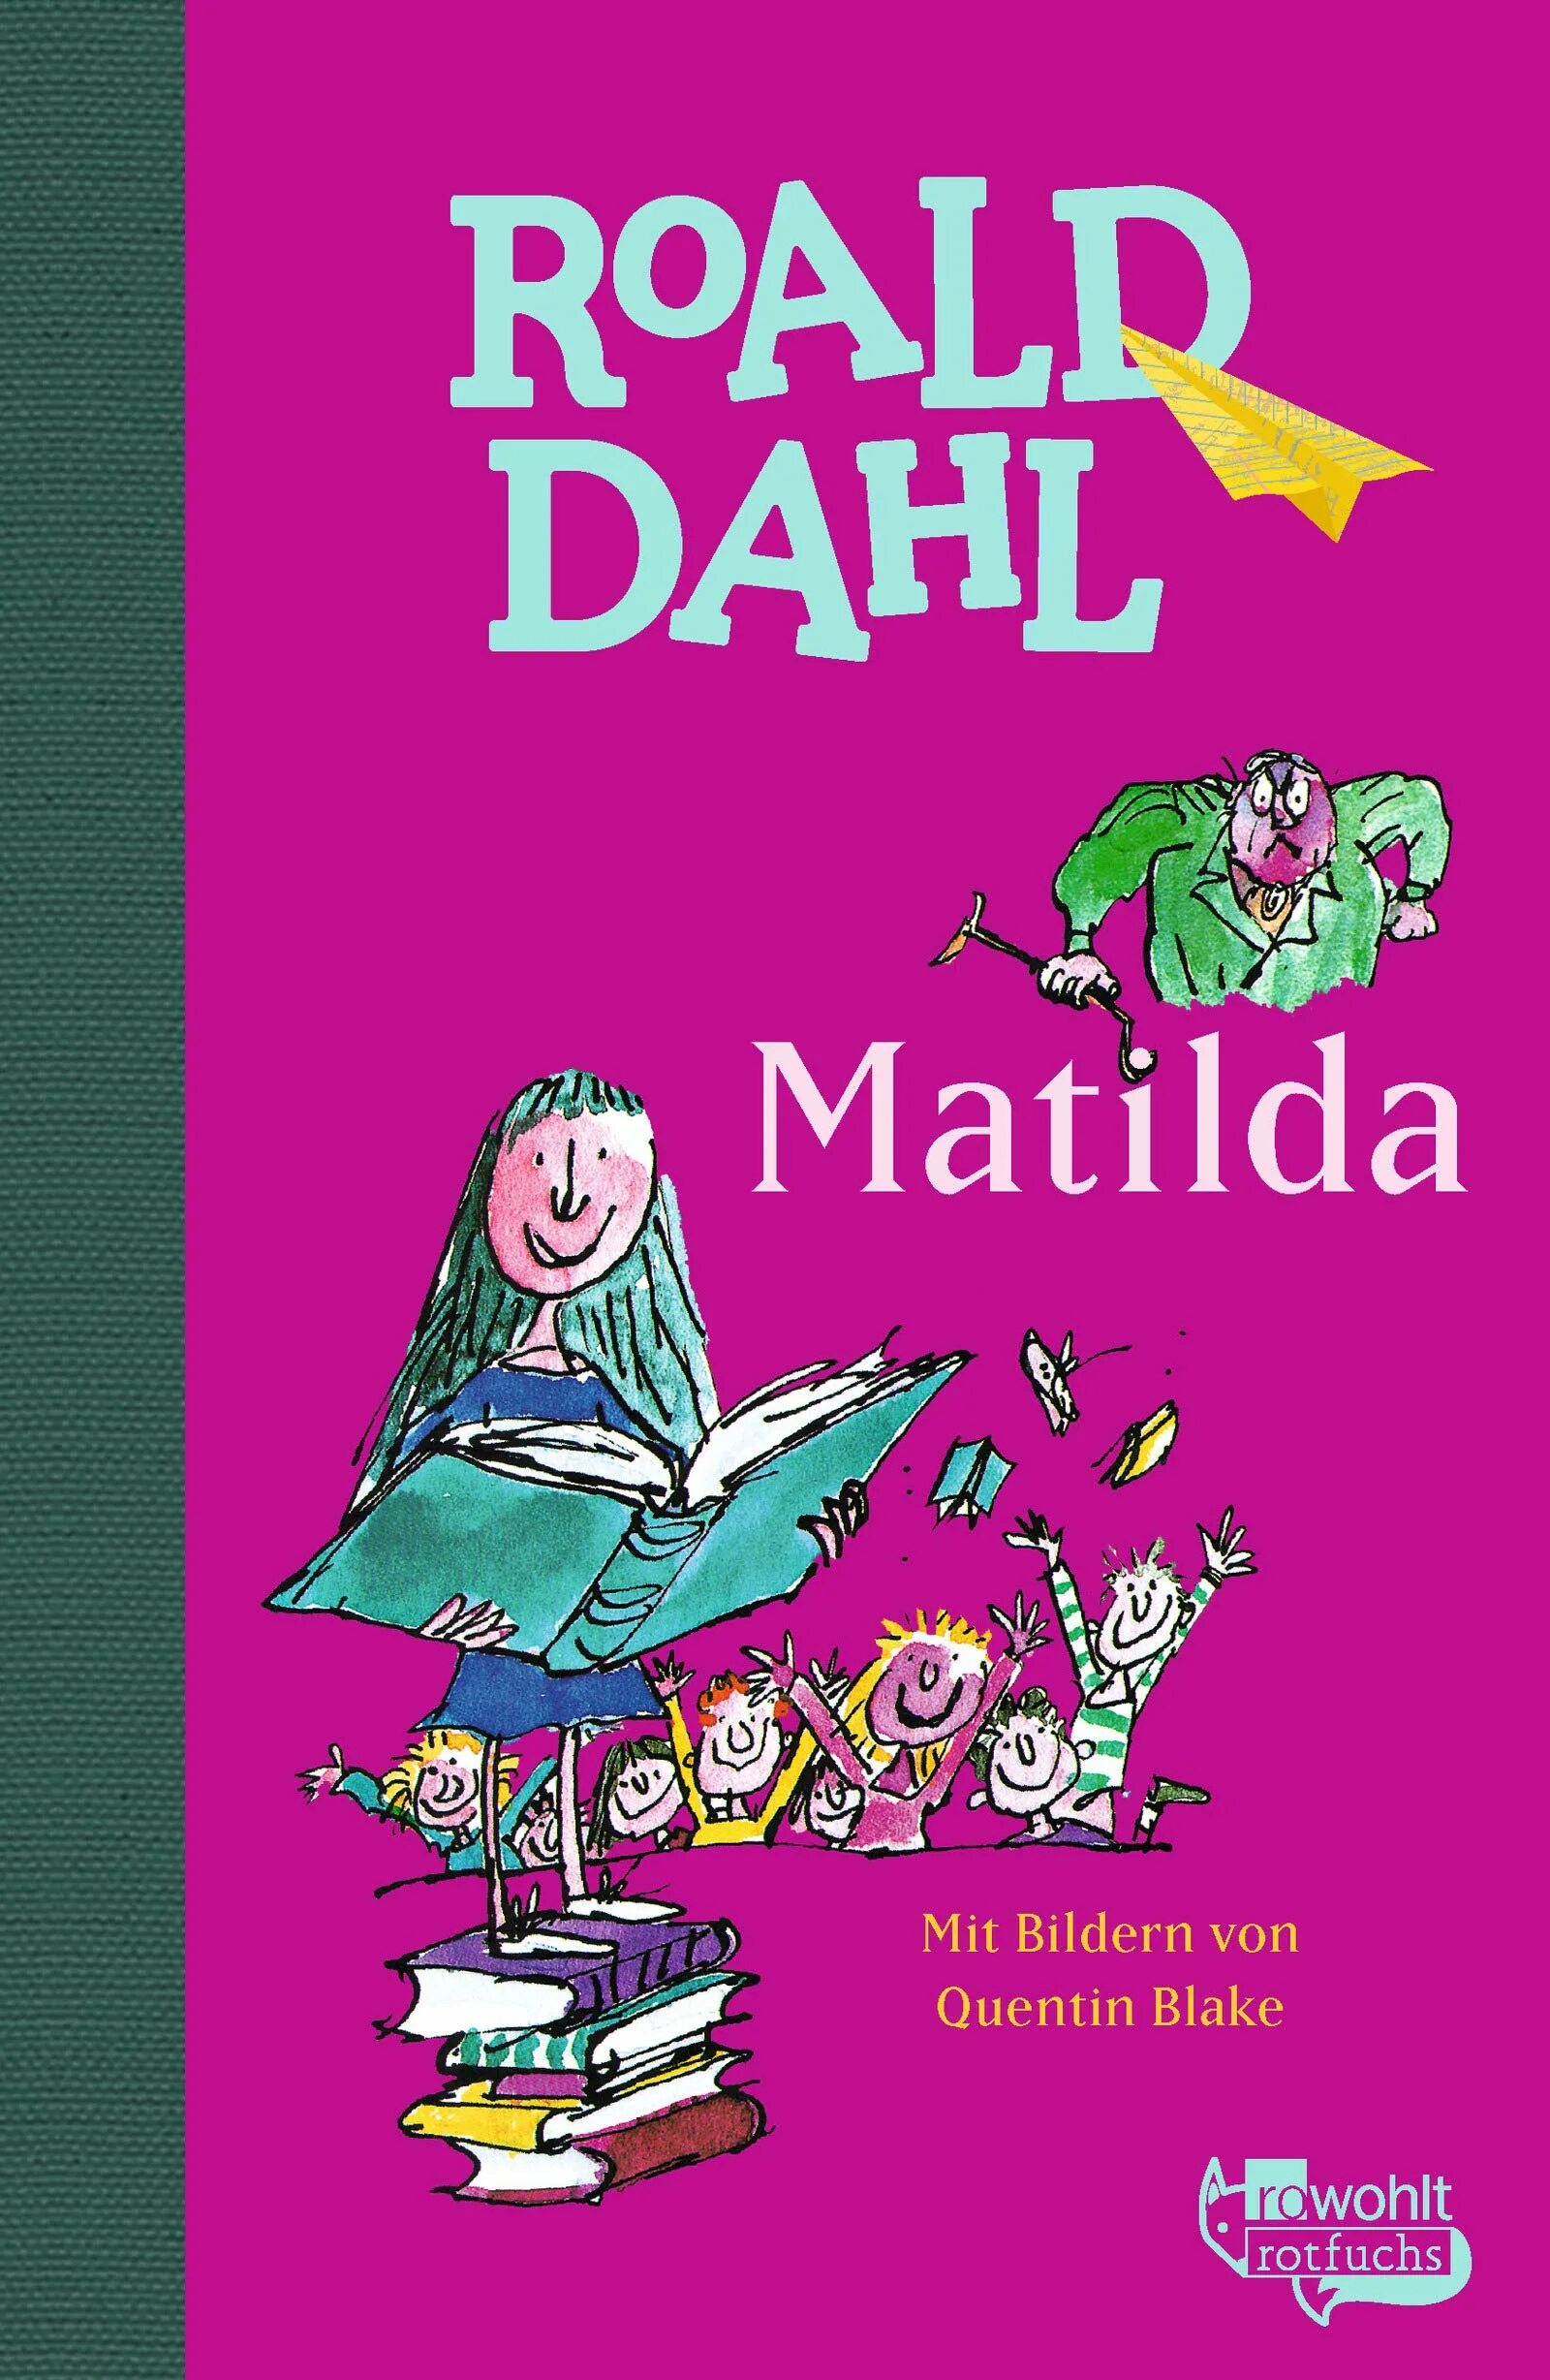 Dahl Roald "Matilda". Matilda de Roald Dahl. Matilda book. Matilda roald dahl